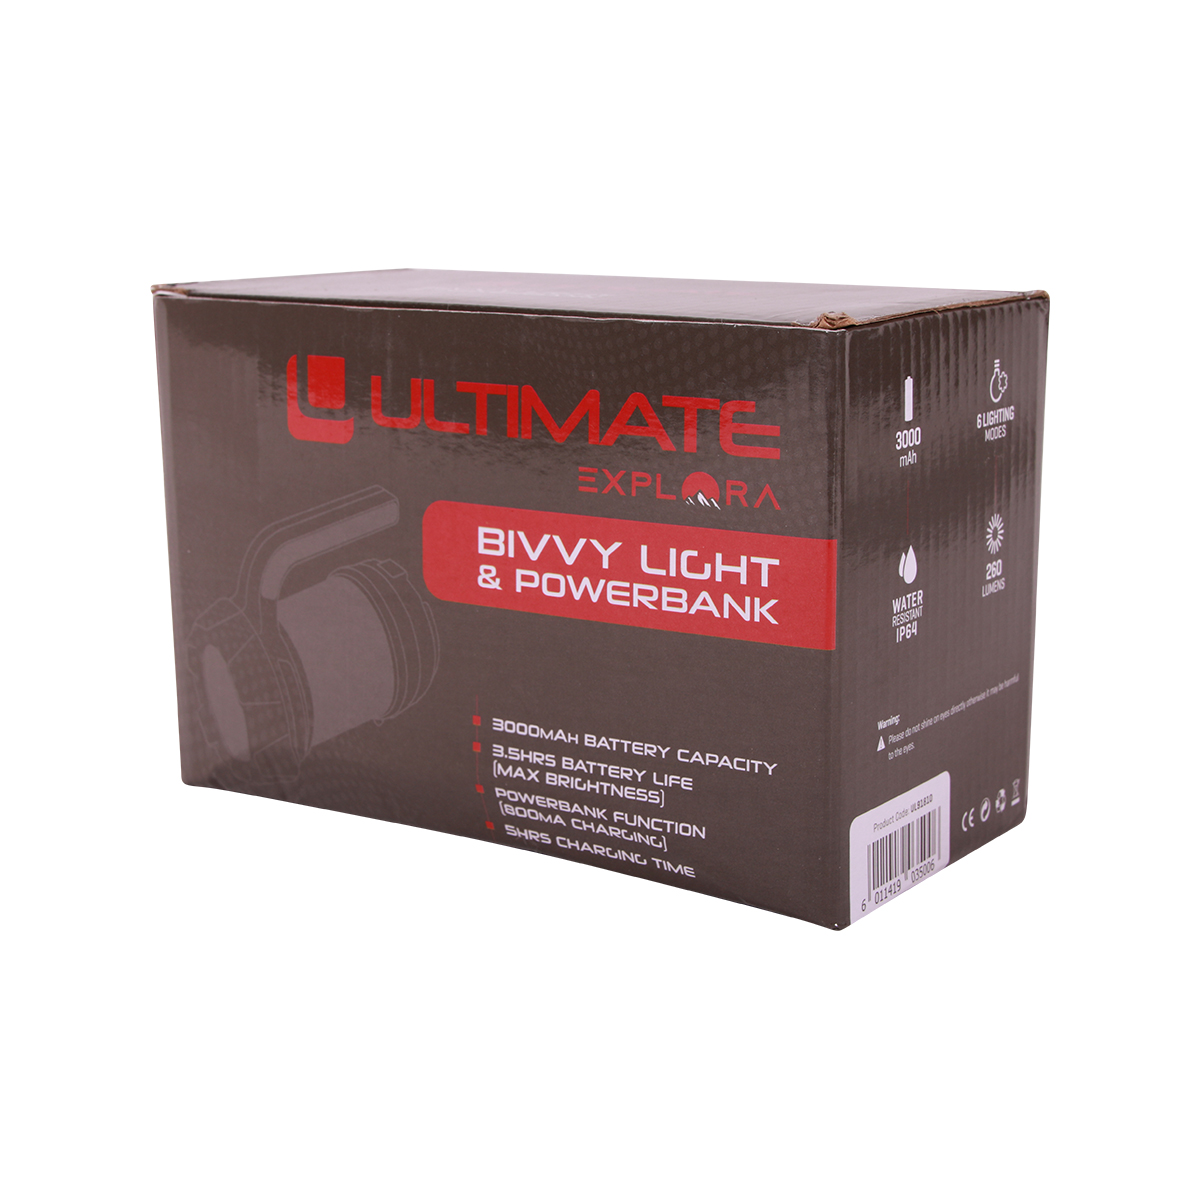 Ultimate Explora Bivvy Light & Powerbank